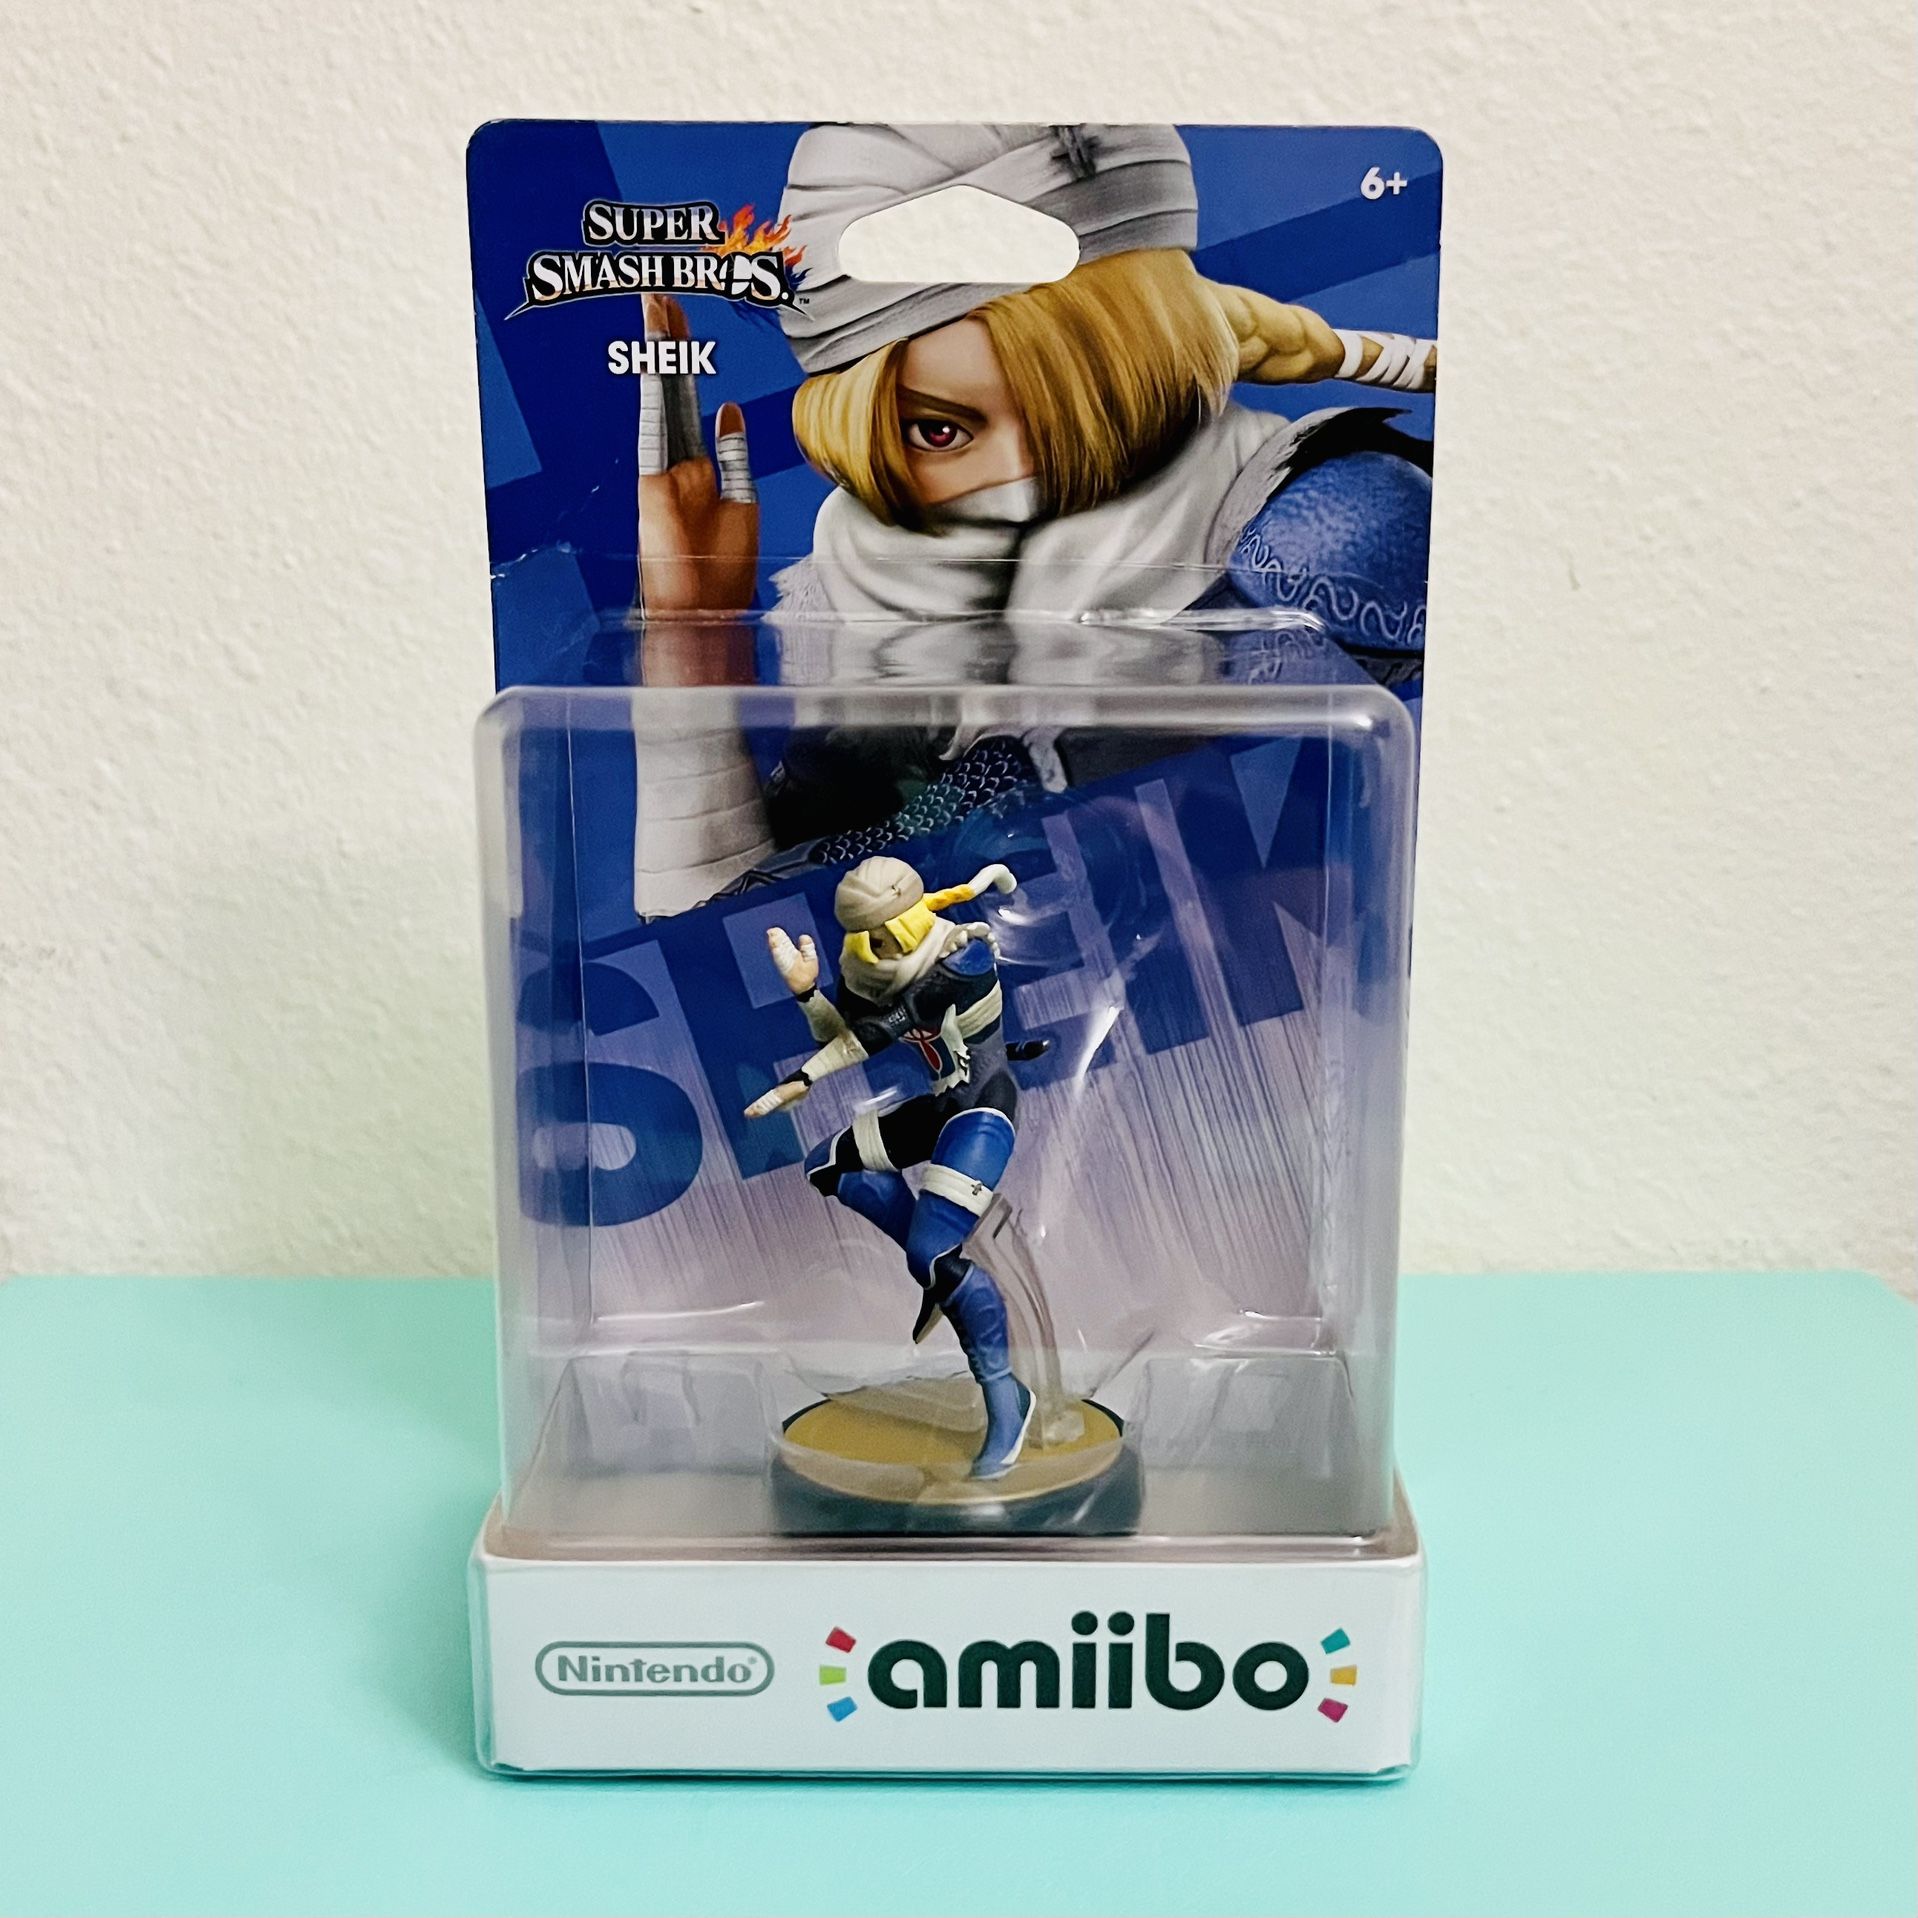 Sheik amiibo Figure - Super Smash Bros. Series (Nintendo, 2015) NEW Sealed Zelda Figurine